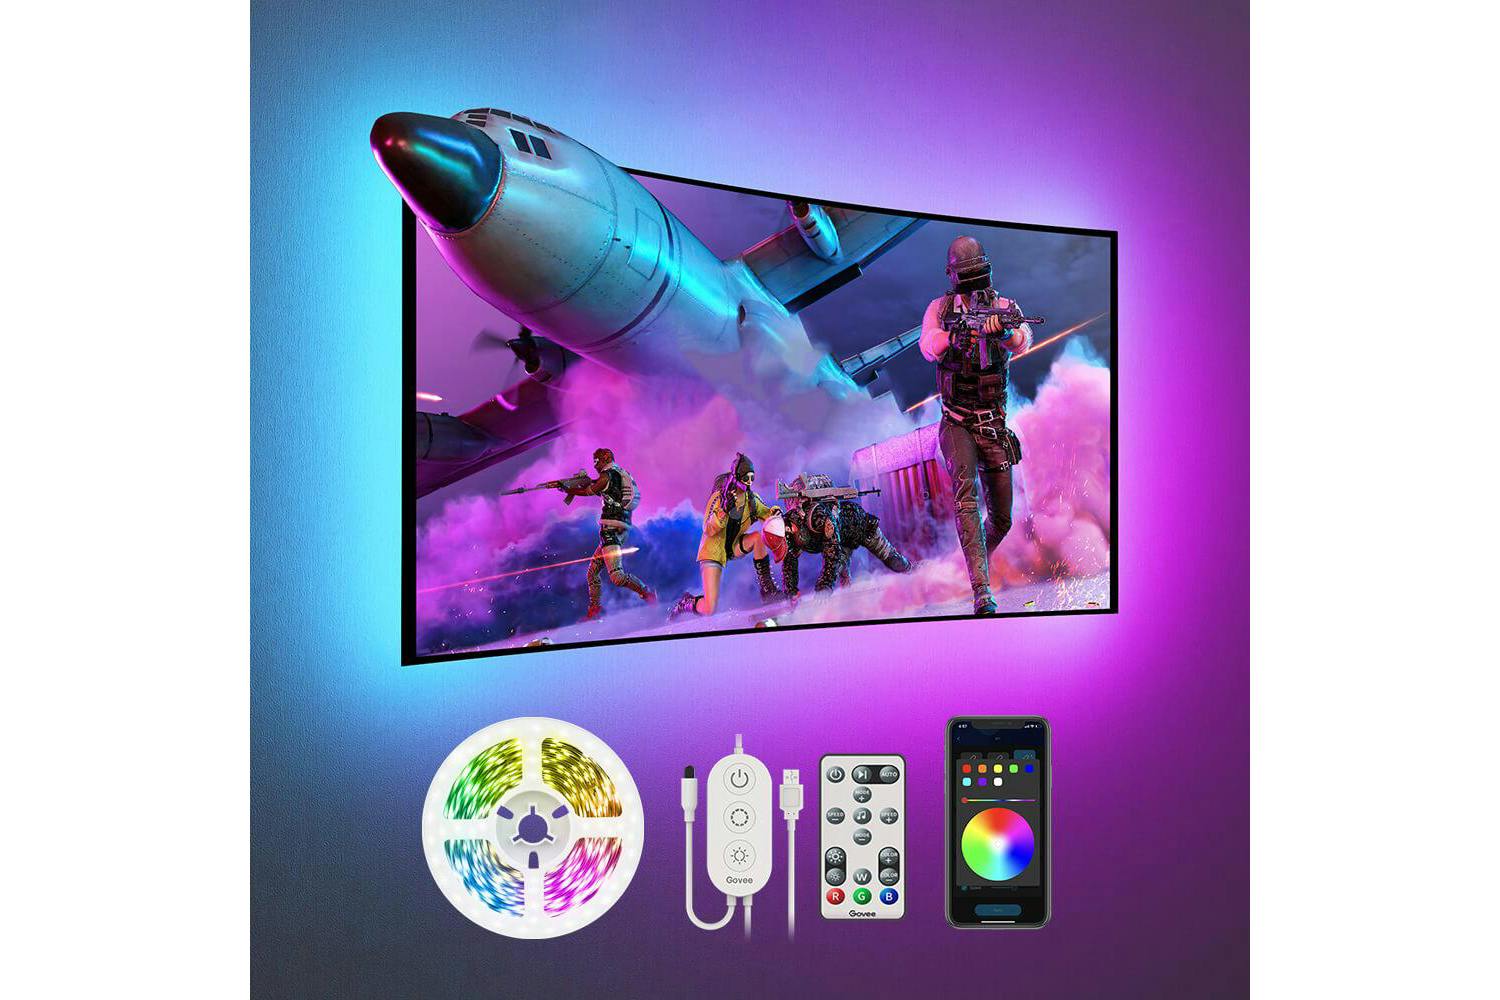 Govee RGB Bluetooth LED Backlight for TVs